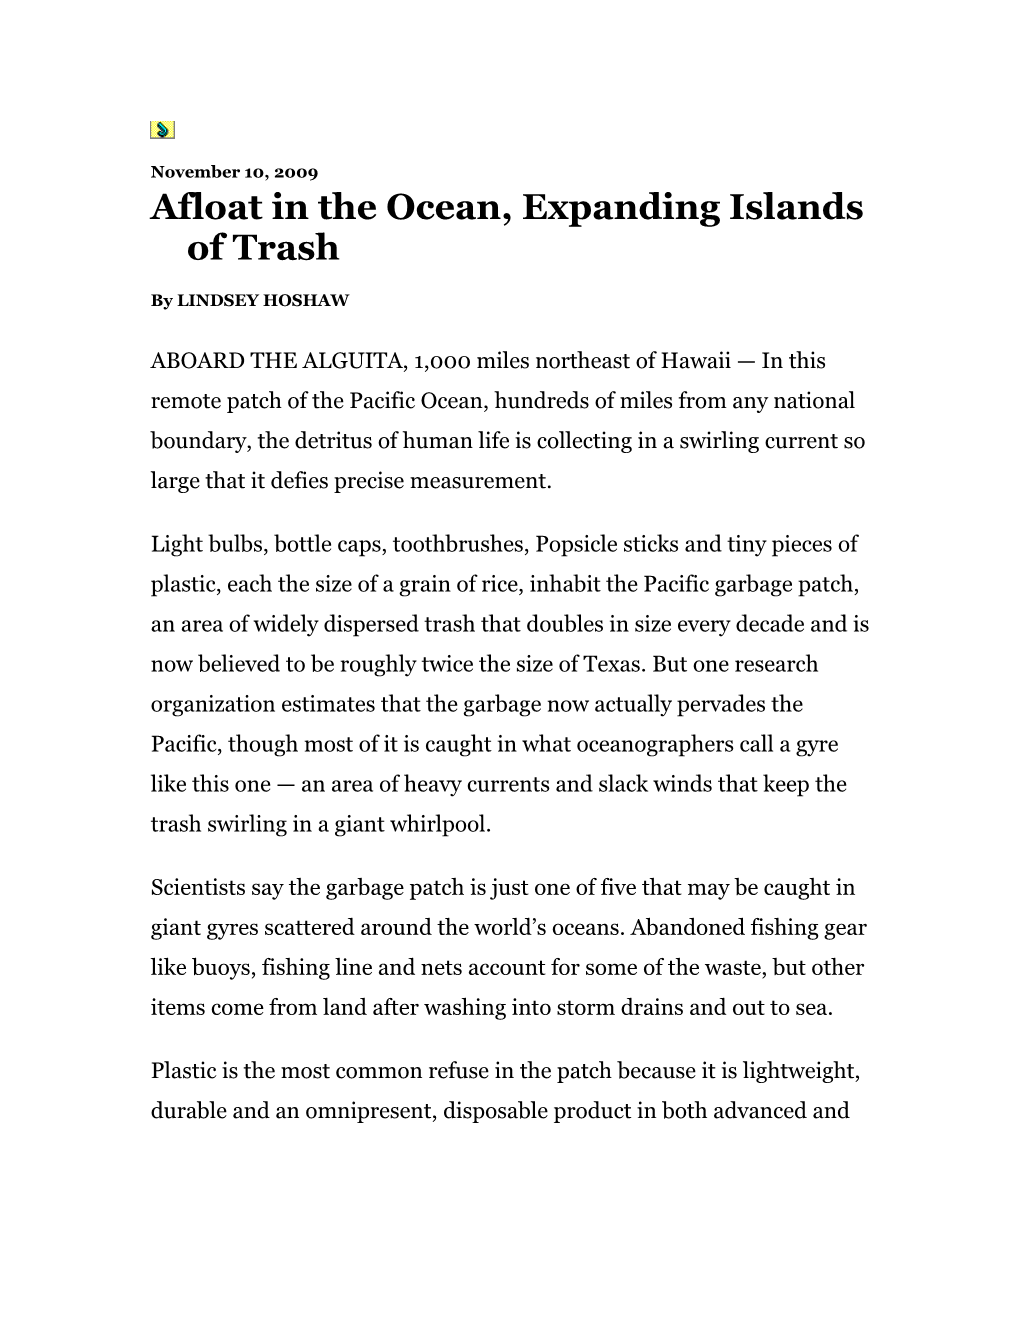 Afloat in the Ocean, Expanding Islands of Trash